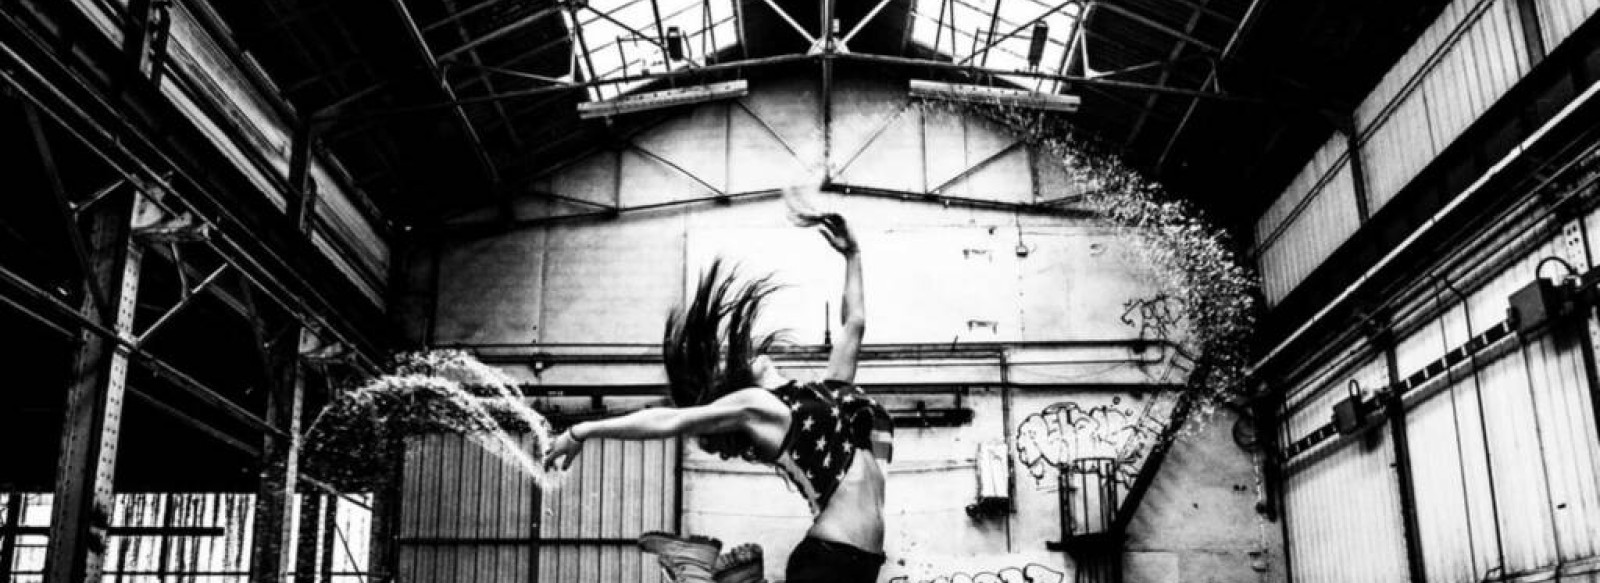 Exposition de photographies de danse - Lucas PERRIGOT